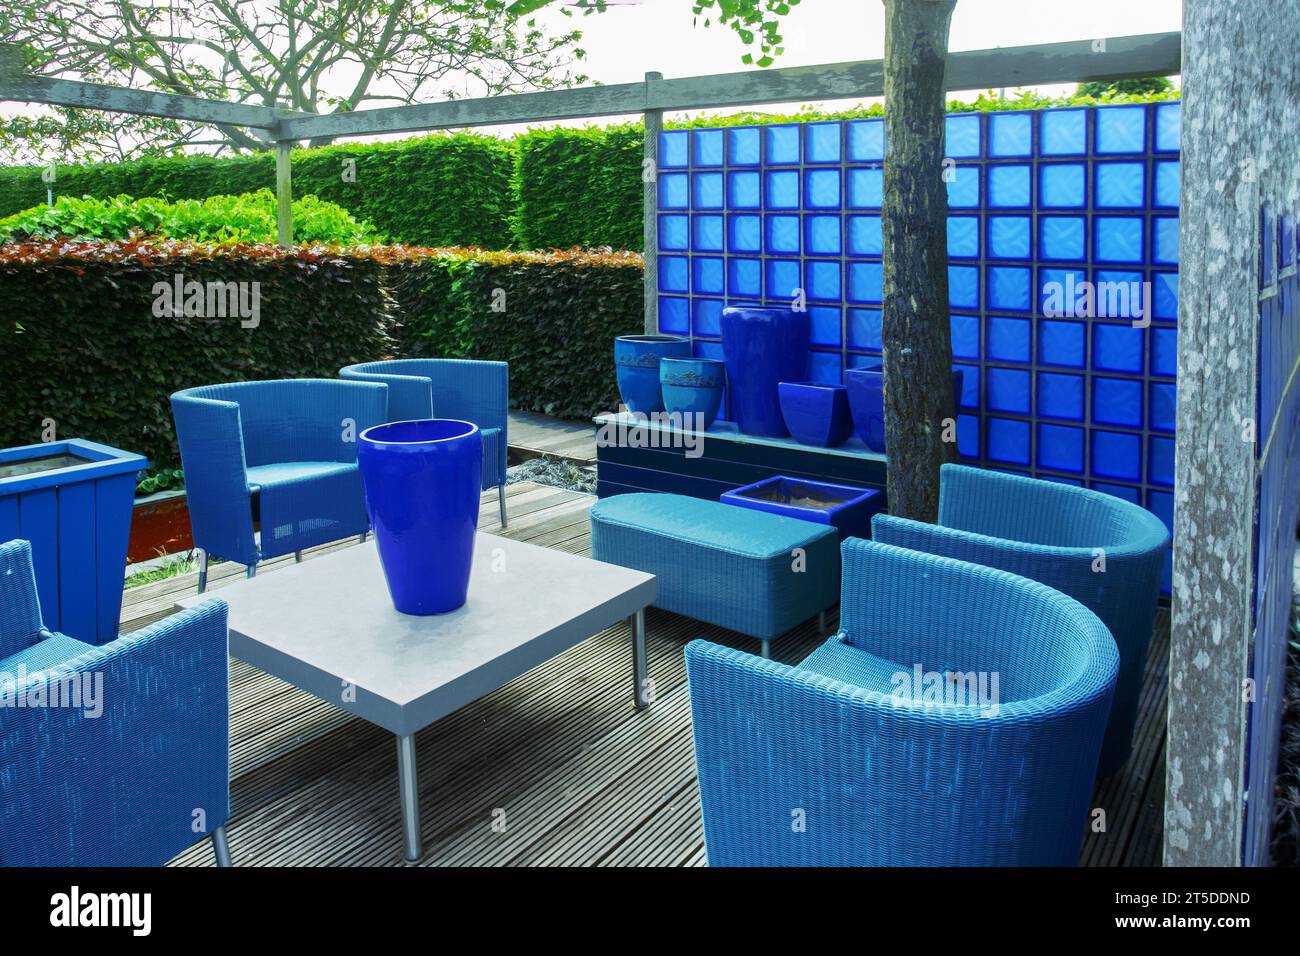 05-28-2016 Paesi Bassi Awe vasi blu e sedie da esterno azzurre in alcuni giardini nei giardini Appeltern nei Paesi Bassi. Recinzioni topiarie da shr Foto Stock